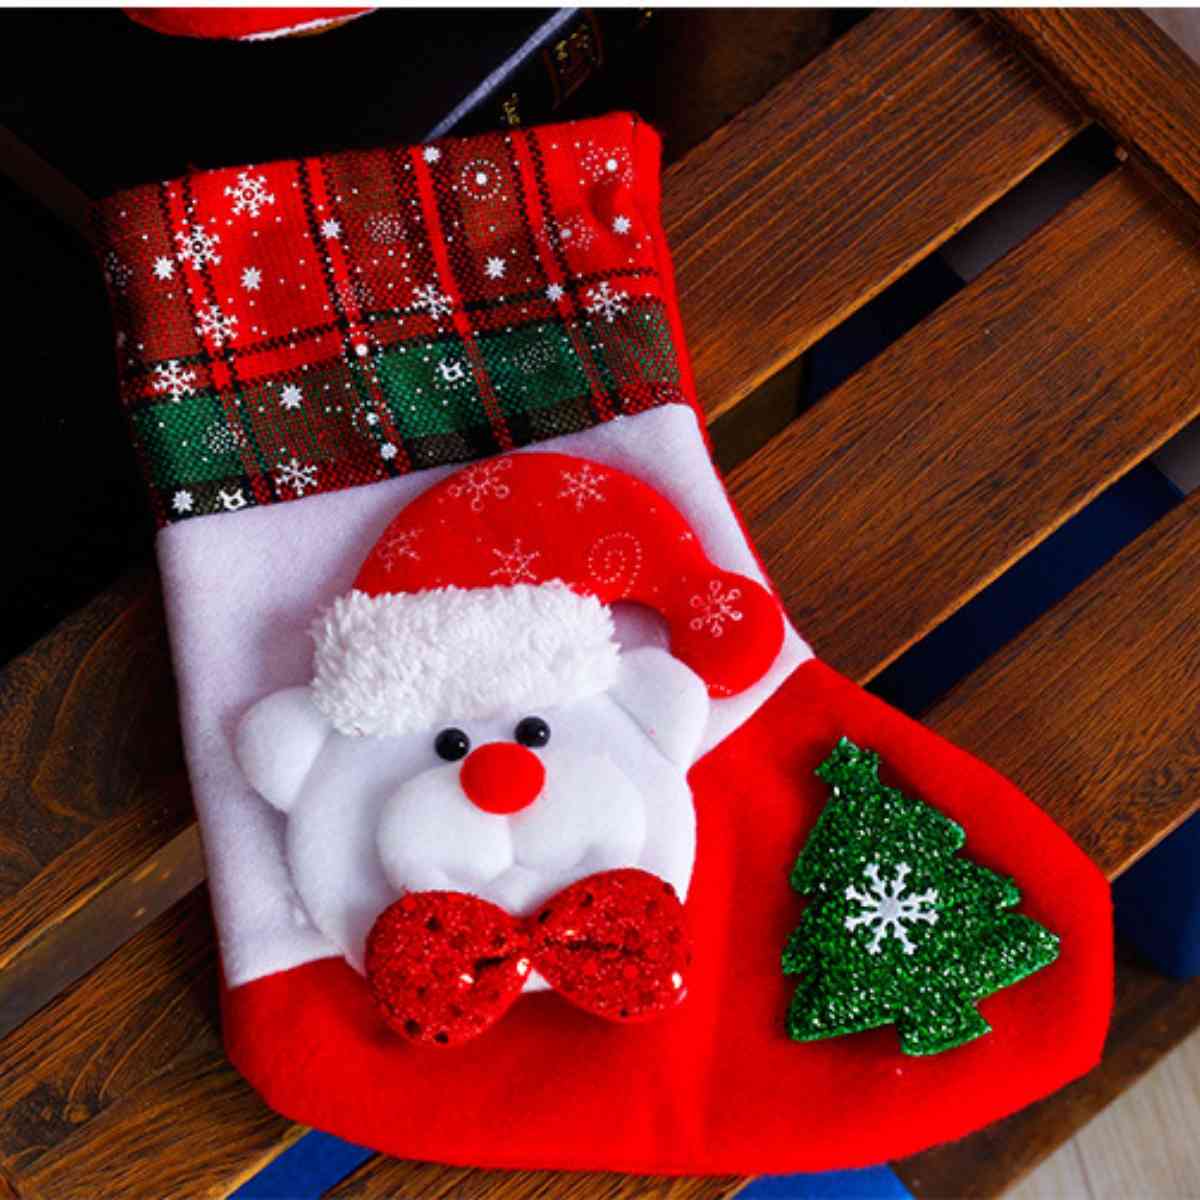 Christmas Stocking Hanging Widget - Dash Trend